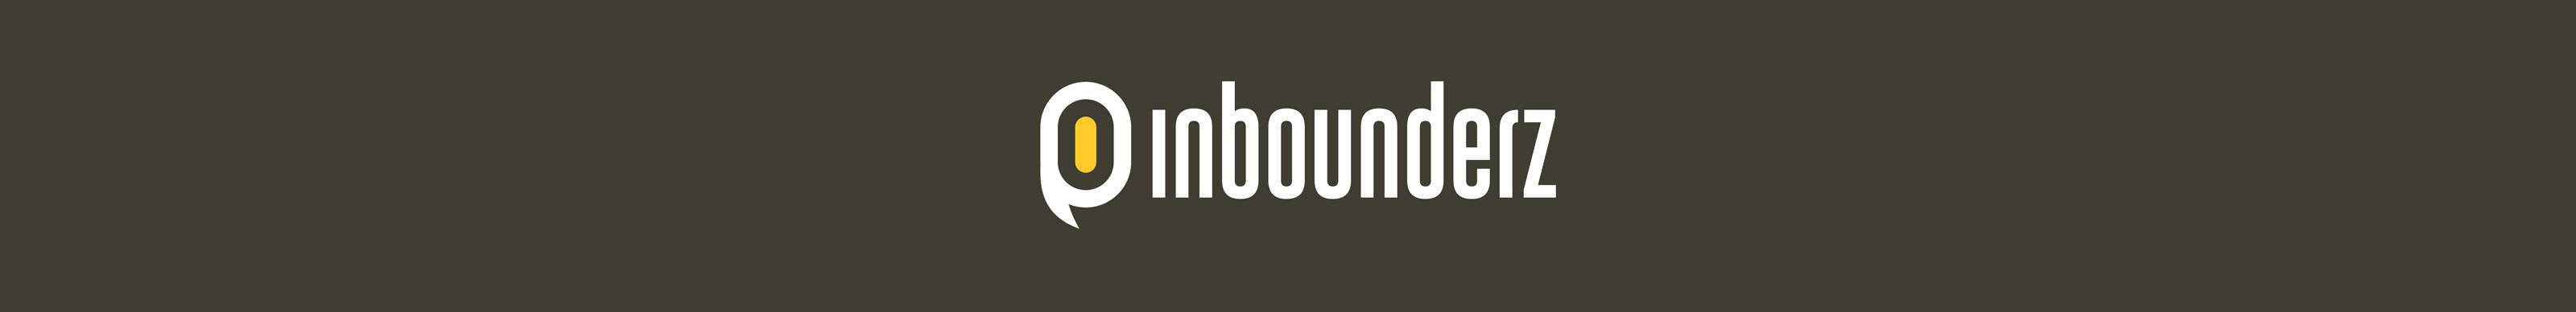 Inbounderz India's profile banner